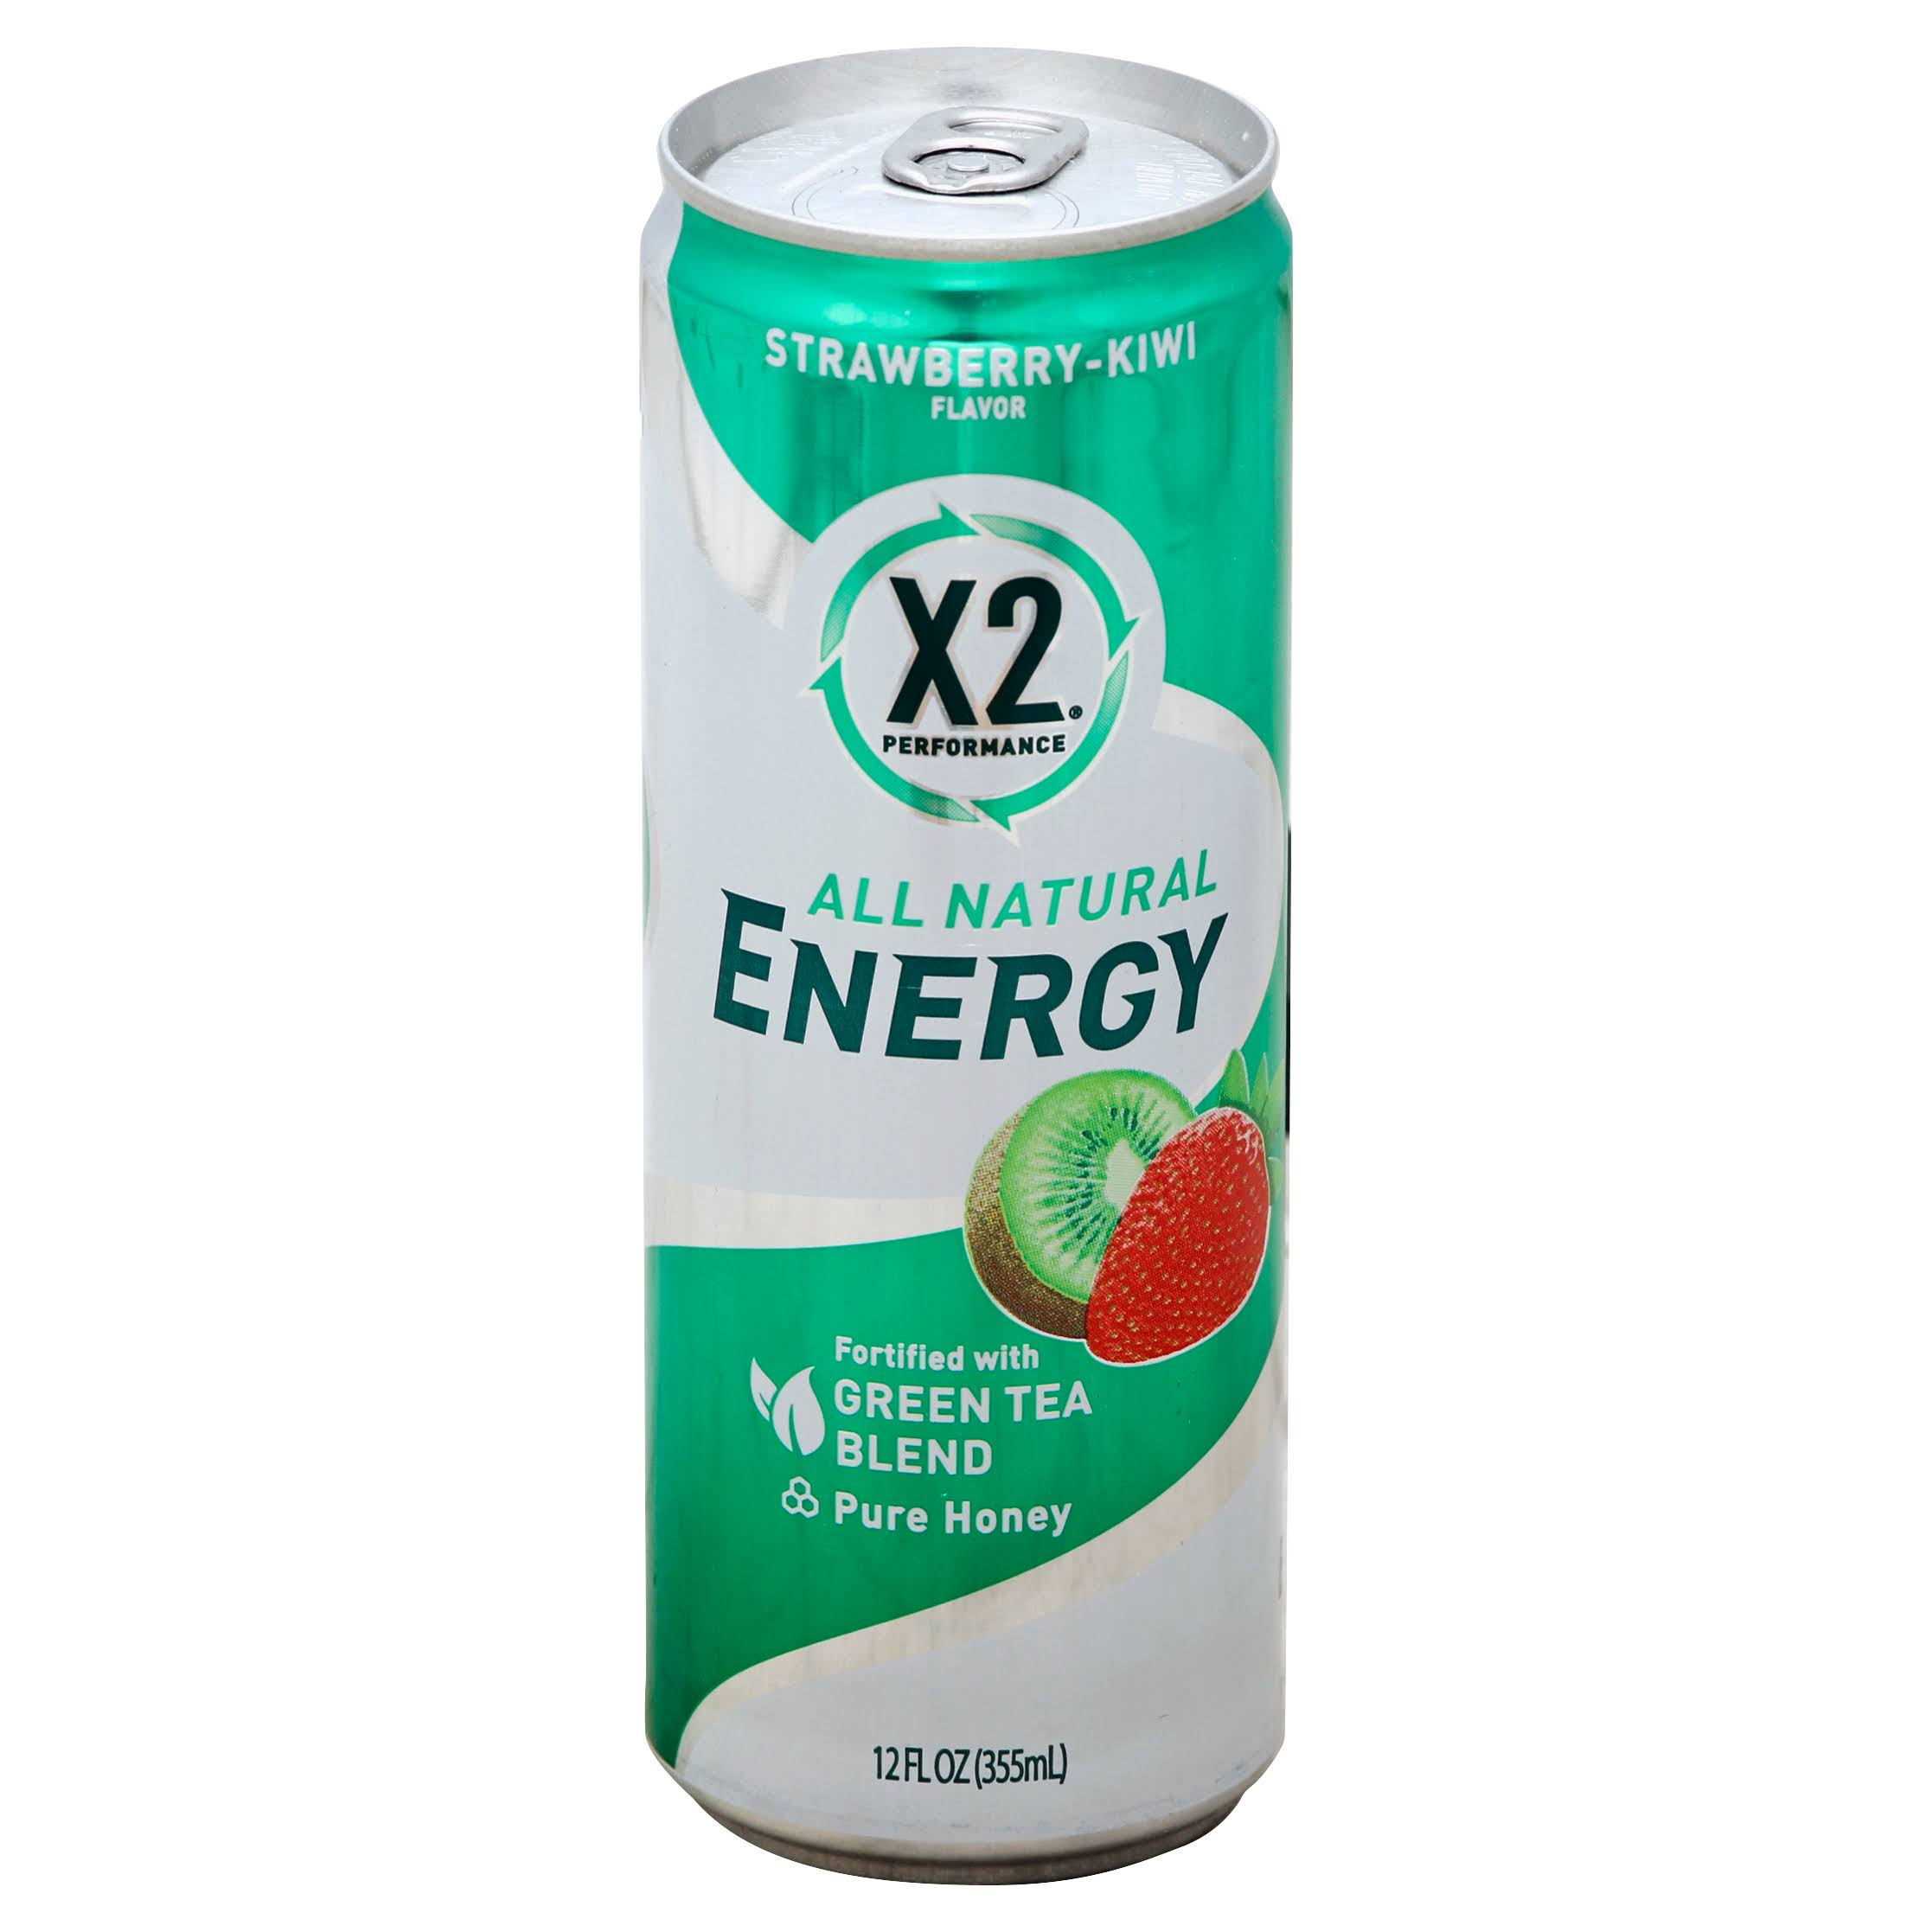 X2 Performance Energy Drink, Strawberry-Kiwi Flavor - 12 fl oz